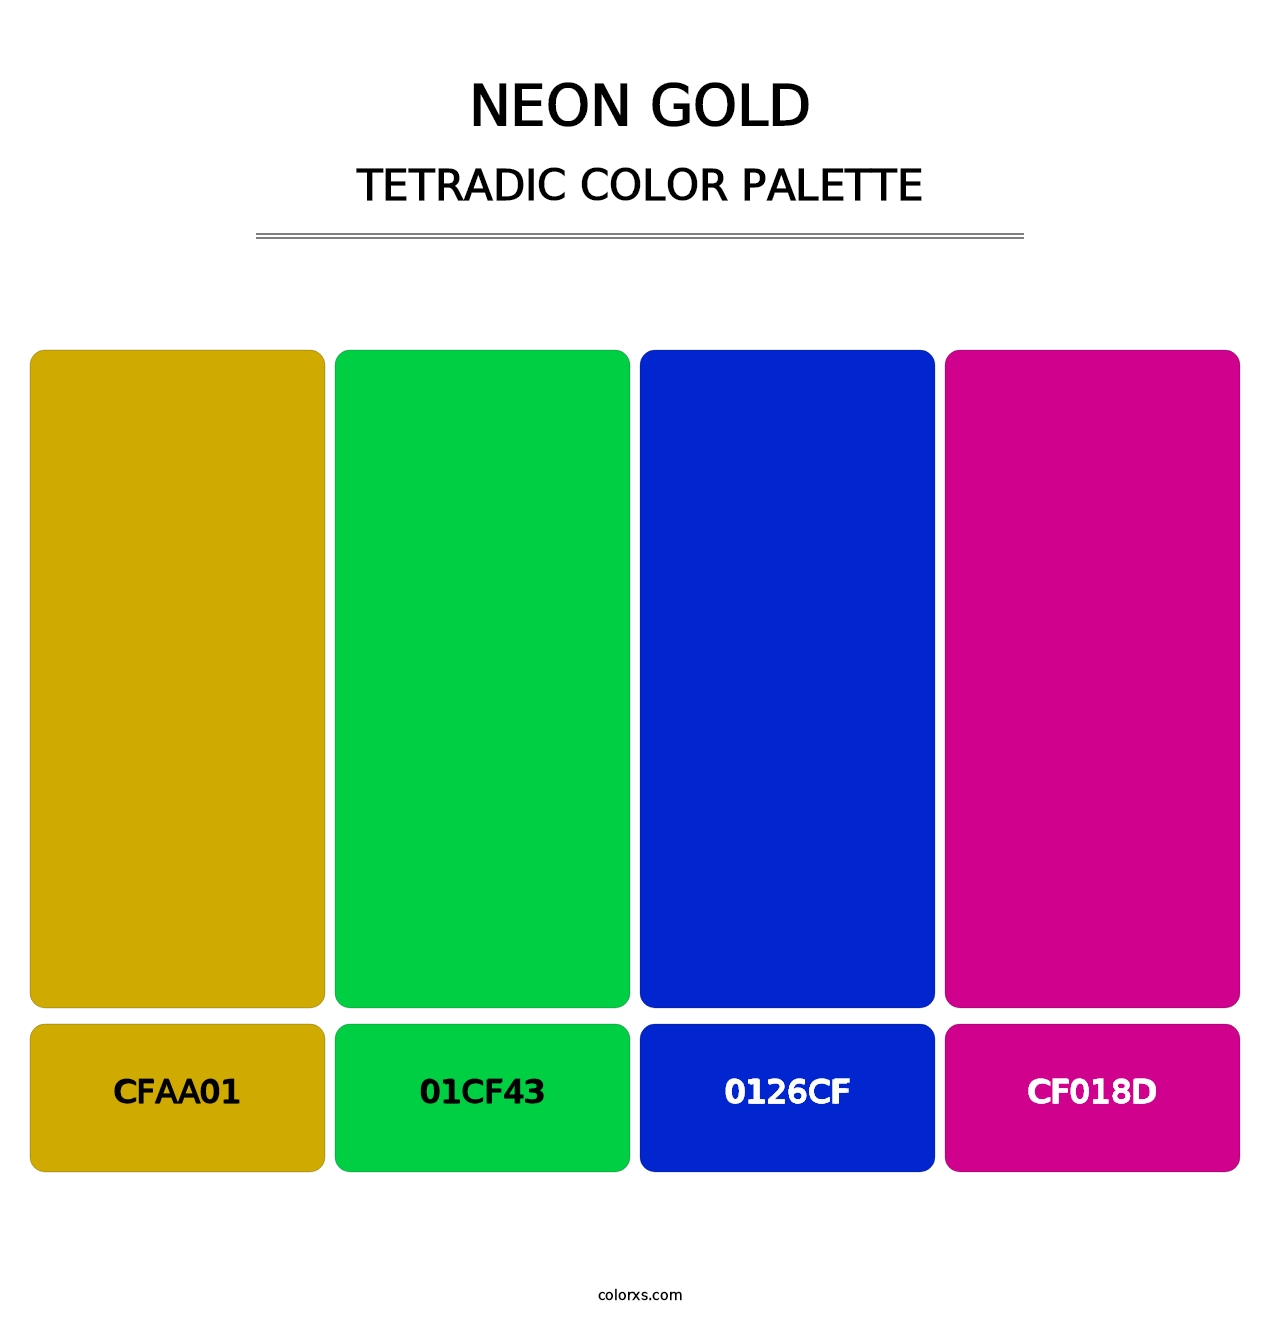 Neon Gold - Tetradic Color Palette